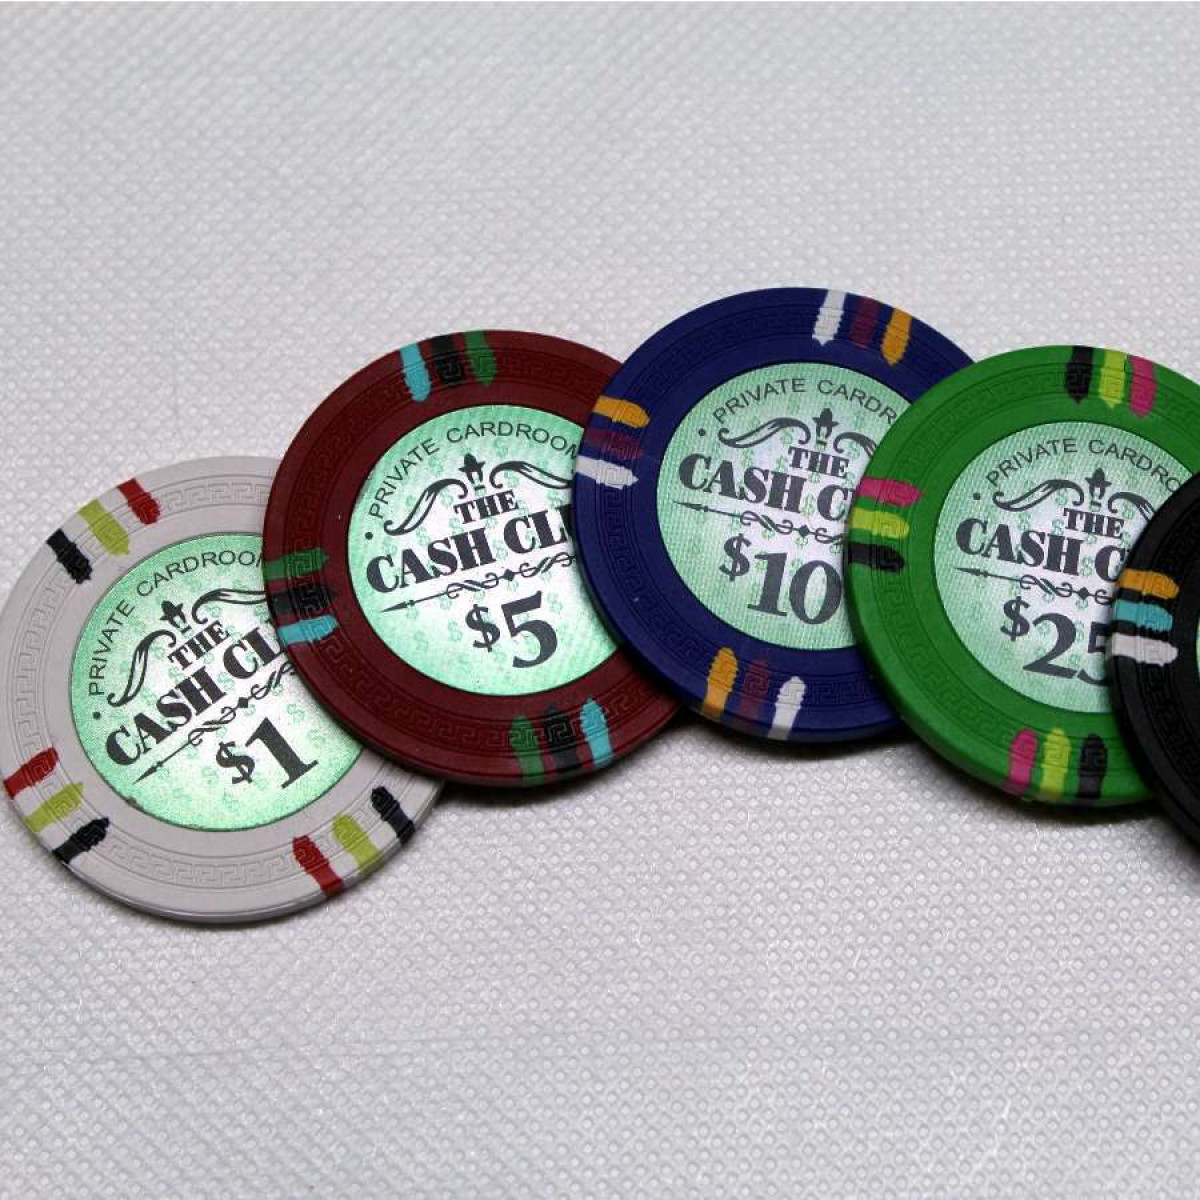 $1 Player’s Club Cardroom Casino Chip Ventura California Paulson H&C 